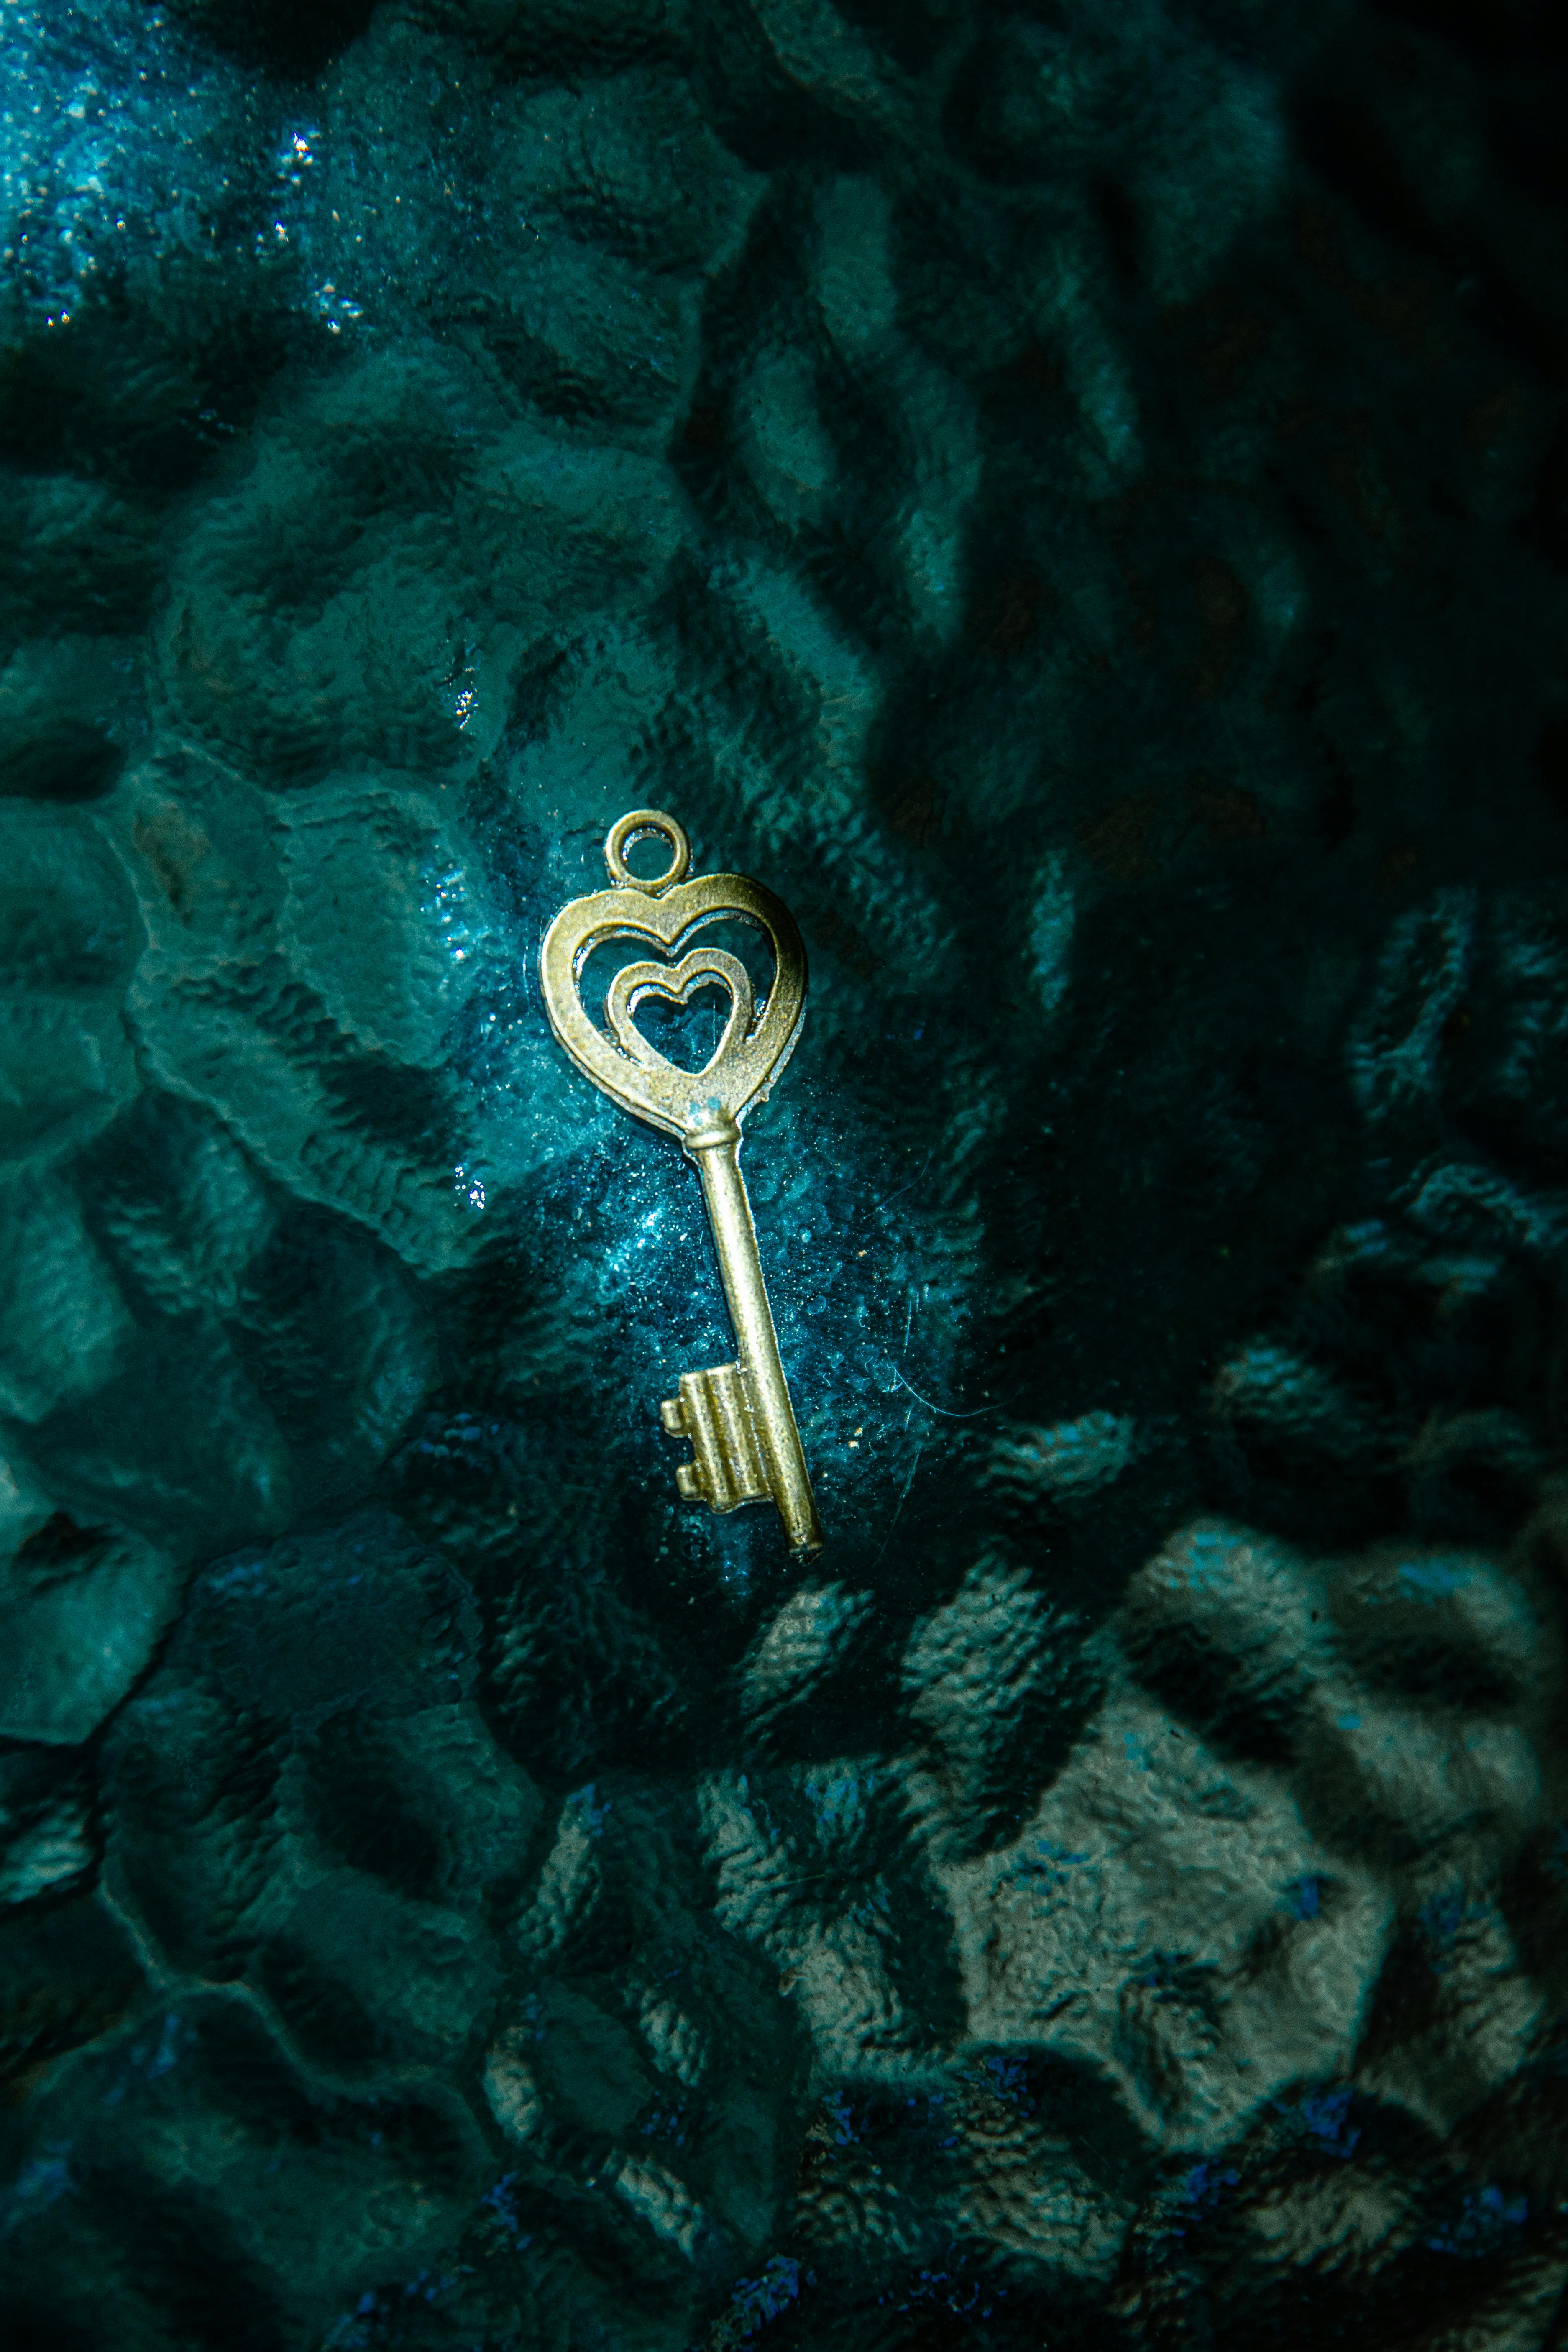 gold key on green textile